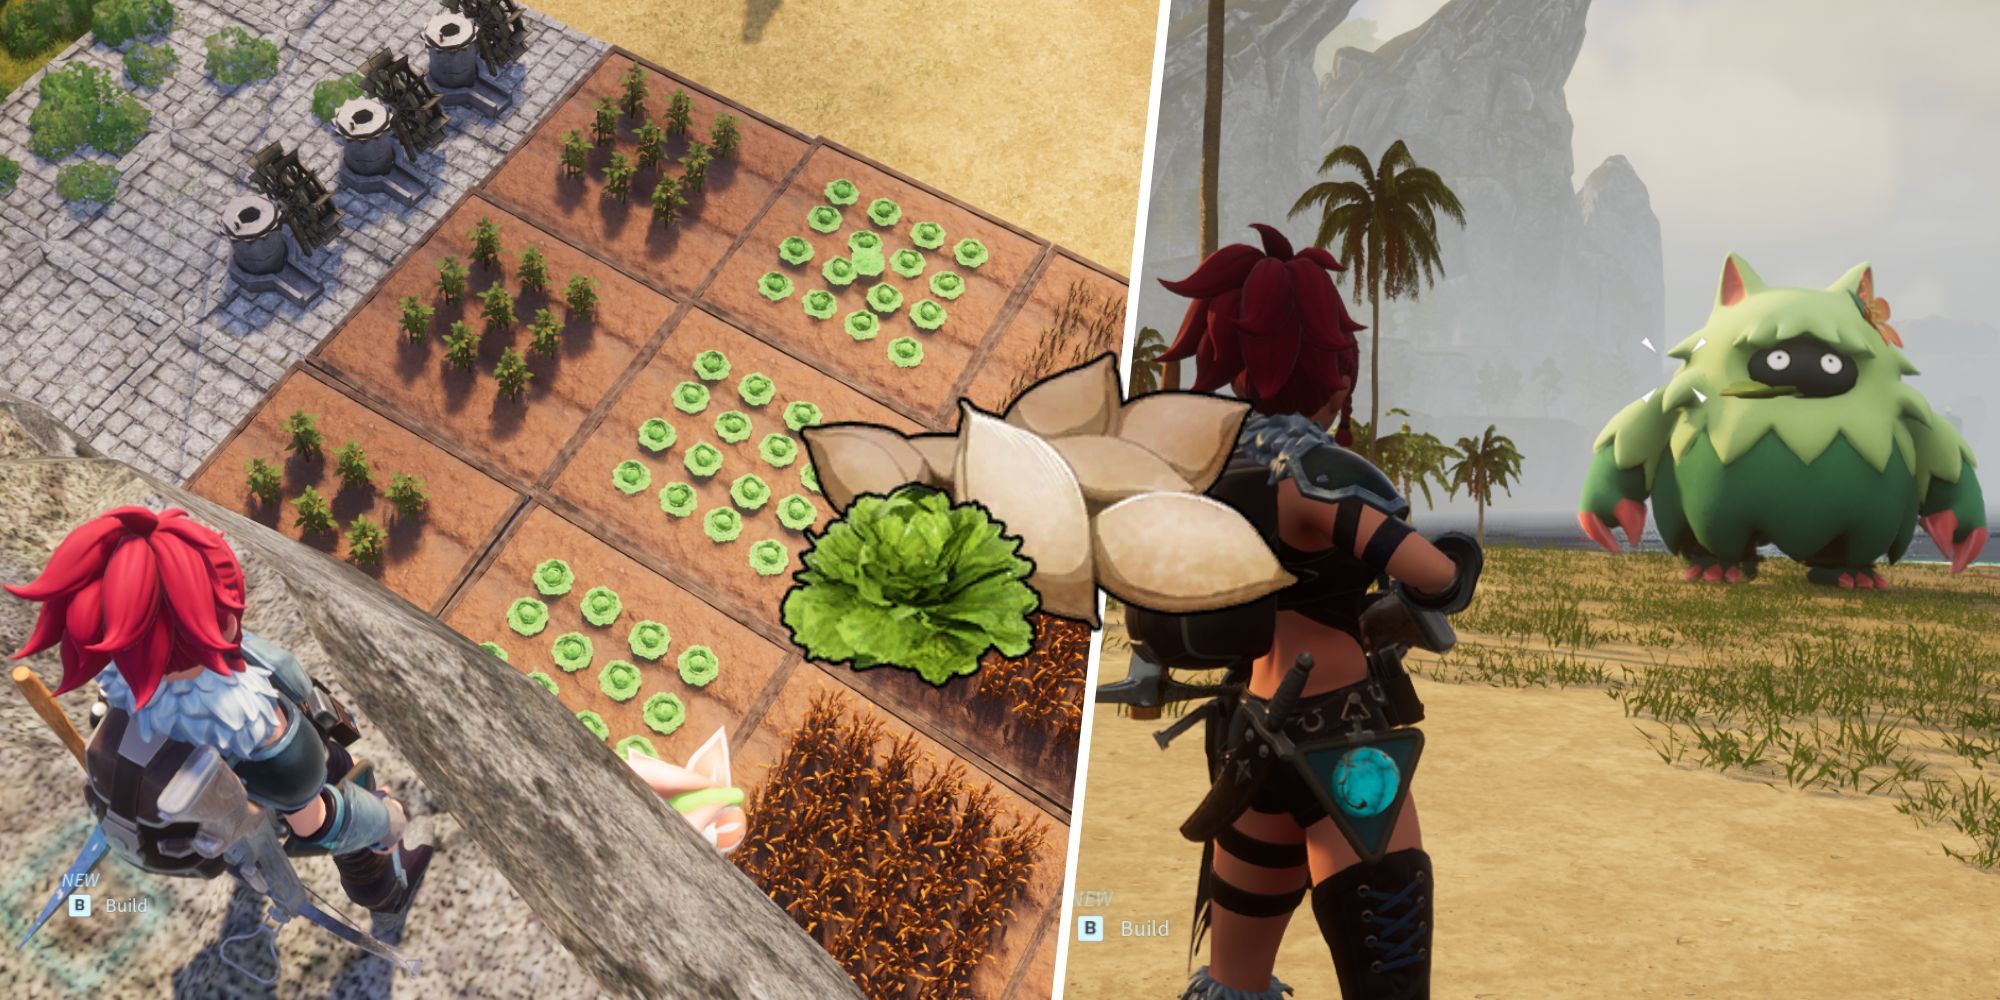 Palworld - Split Image: crop plantations / player encountering a Wumpo Botan